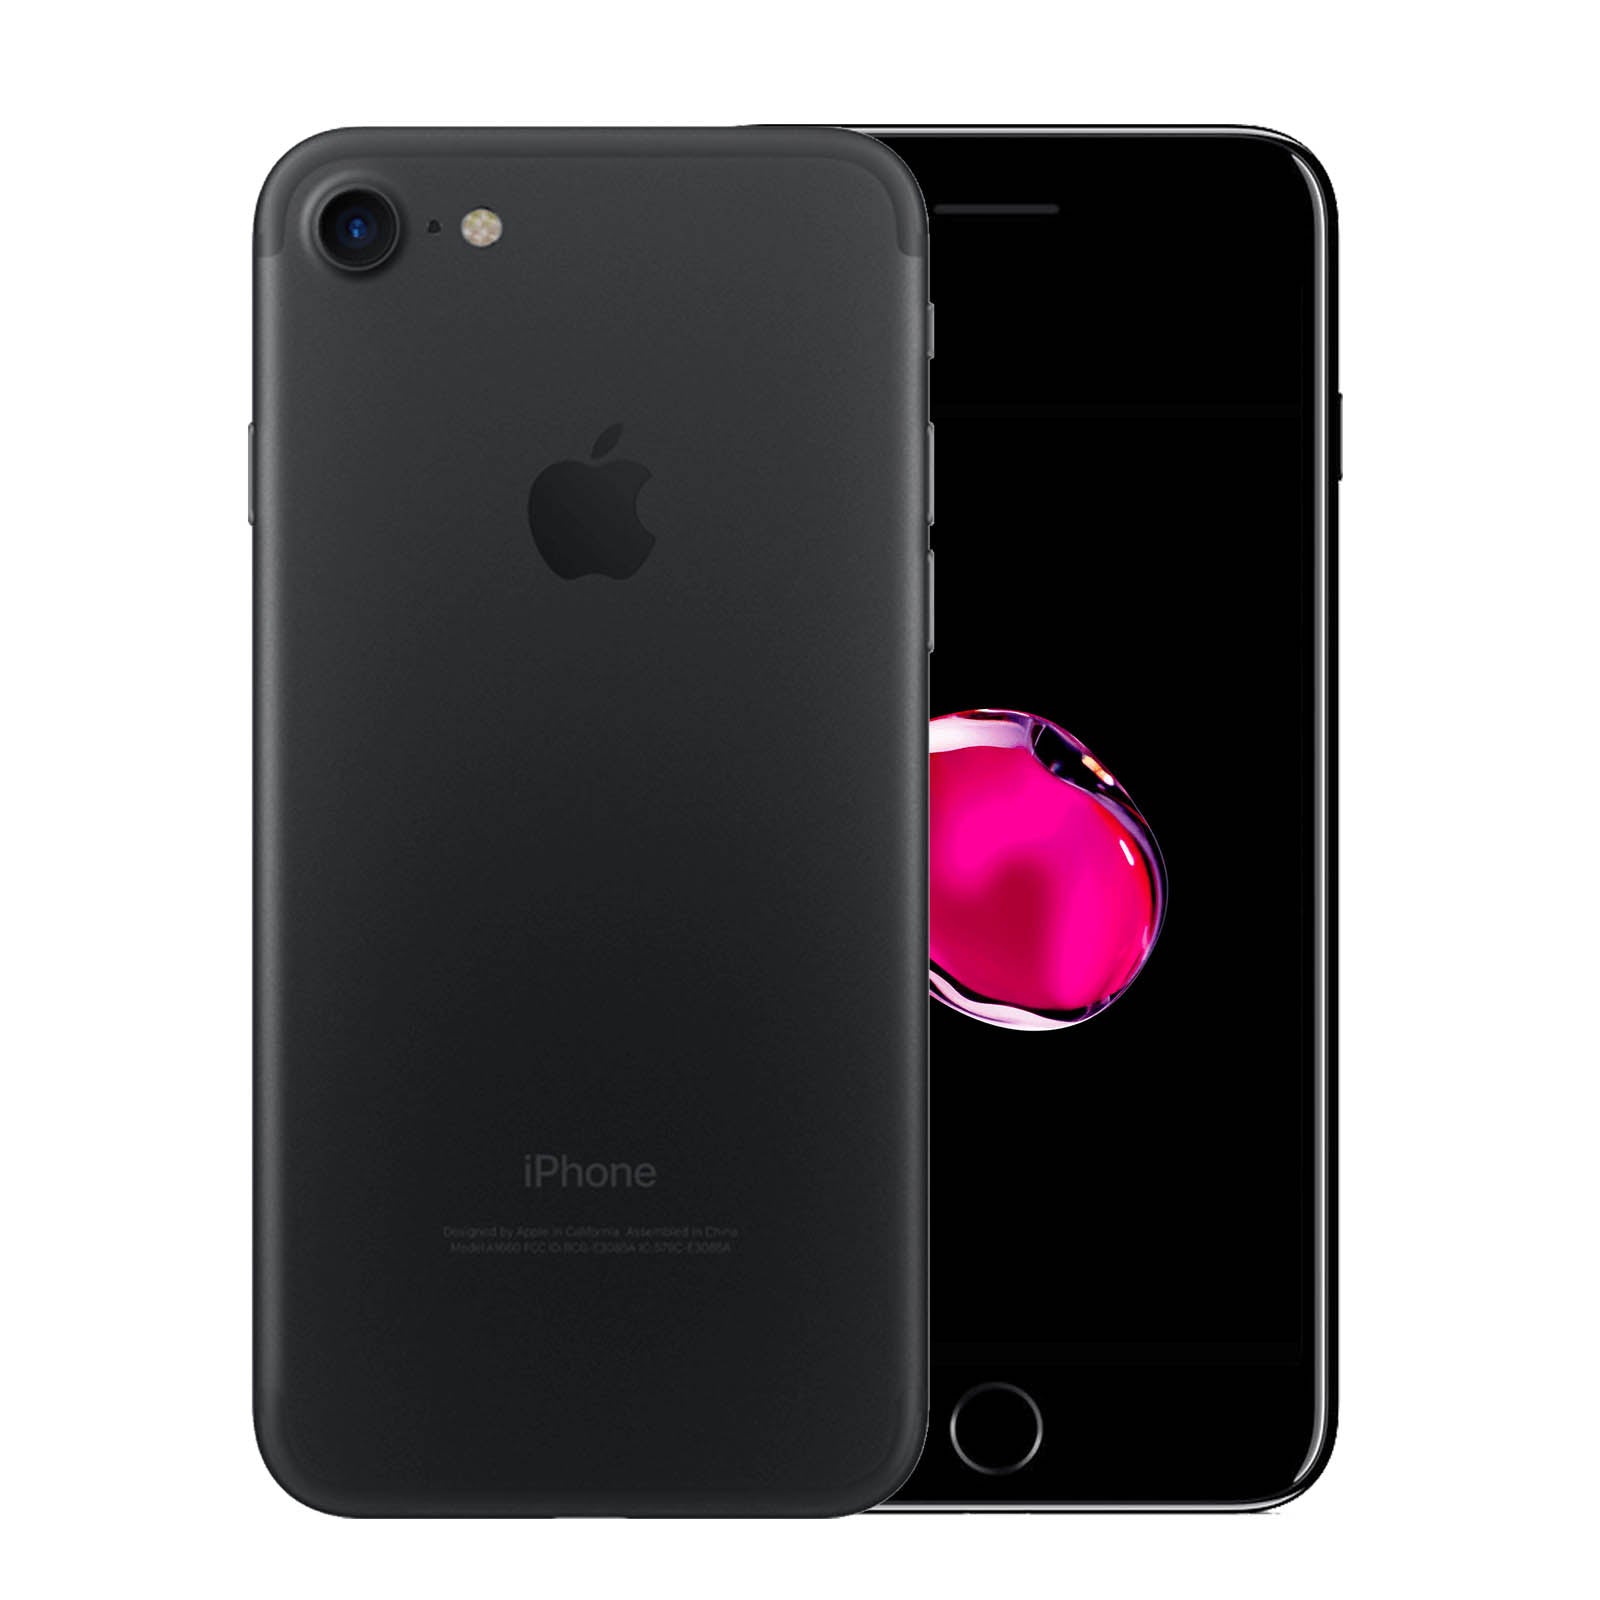 Apple iPhone 7 128GB Black Very Good- Unlocked